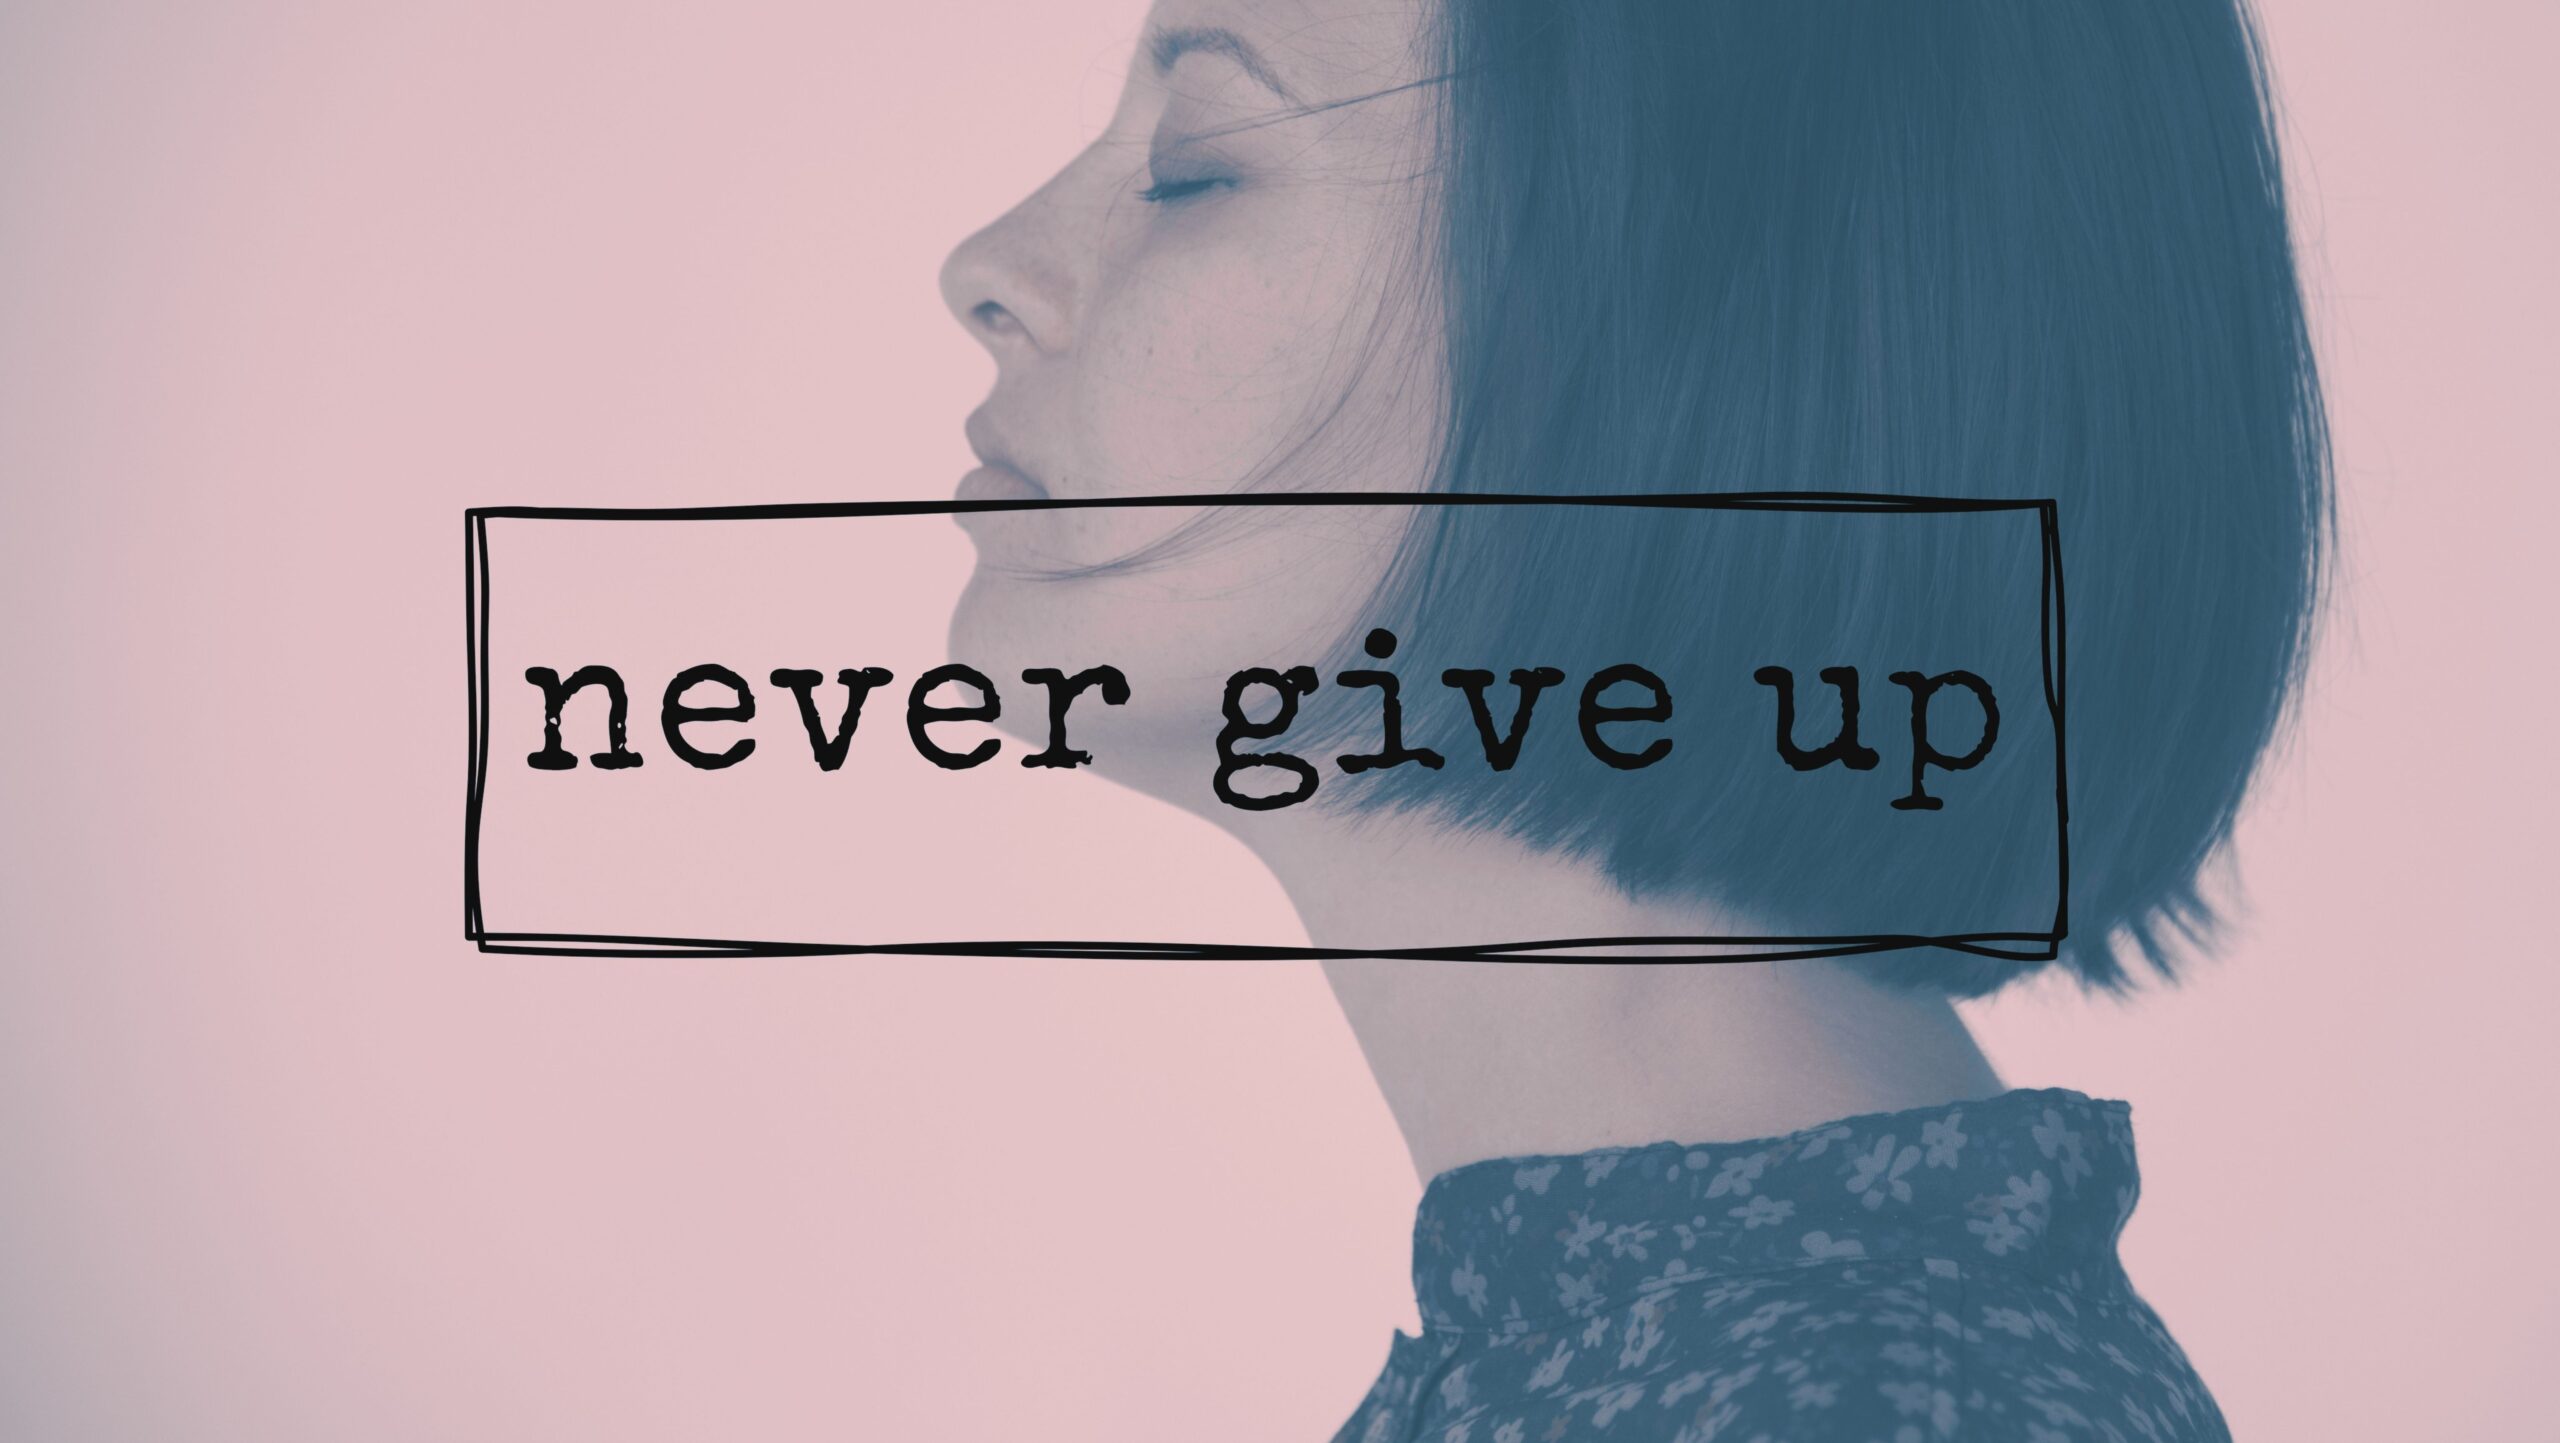 Never give up! Never surrender!